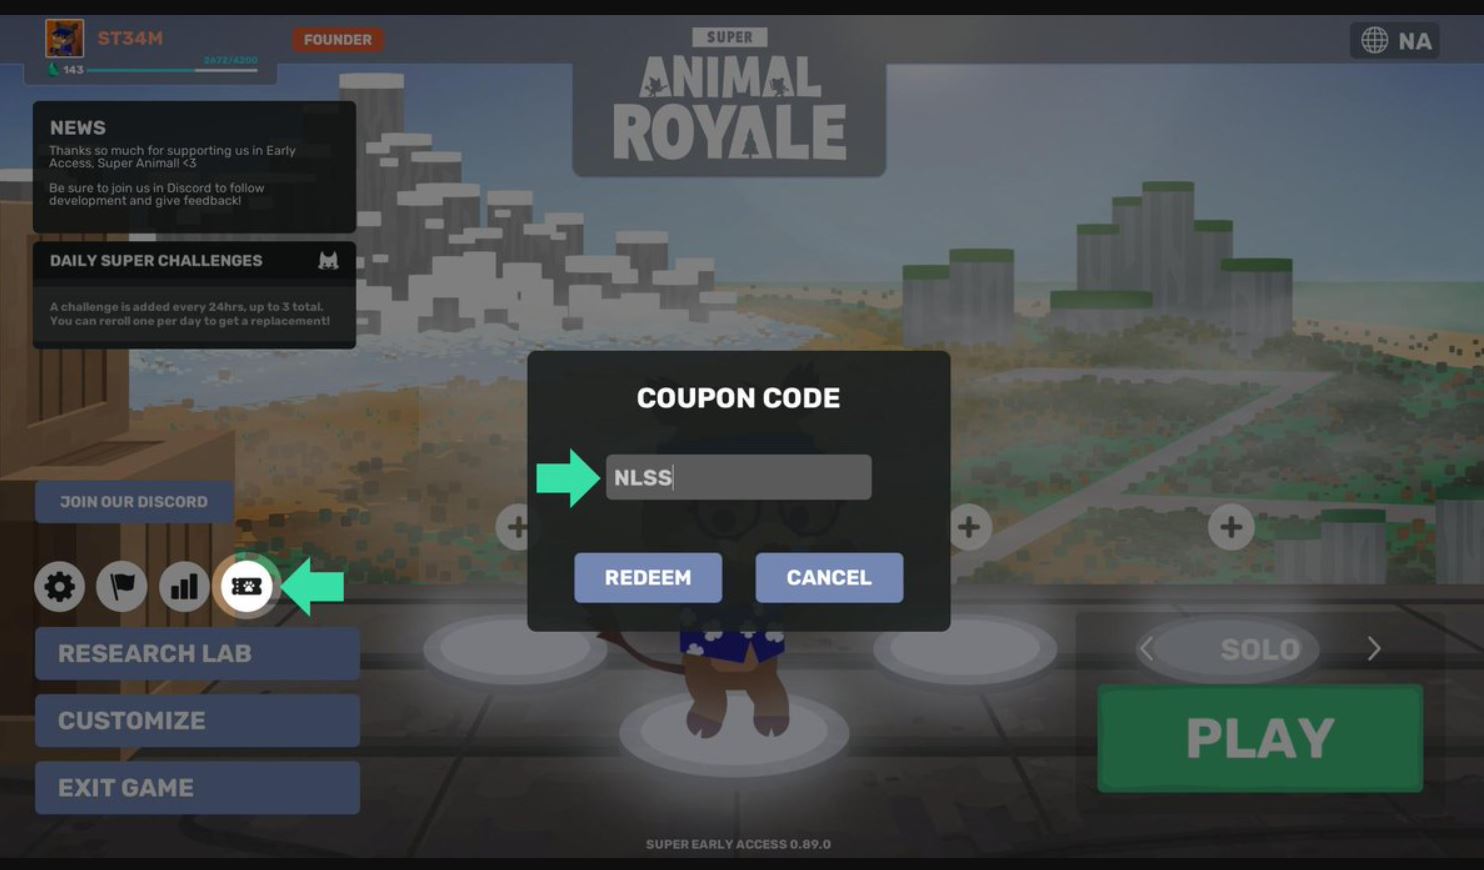 Super Animal Royale Codes